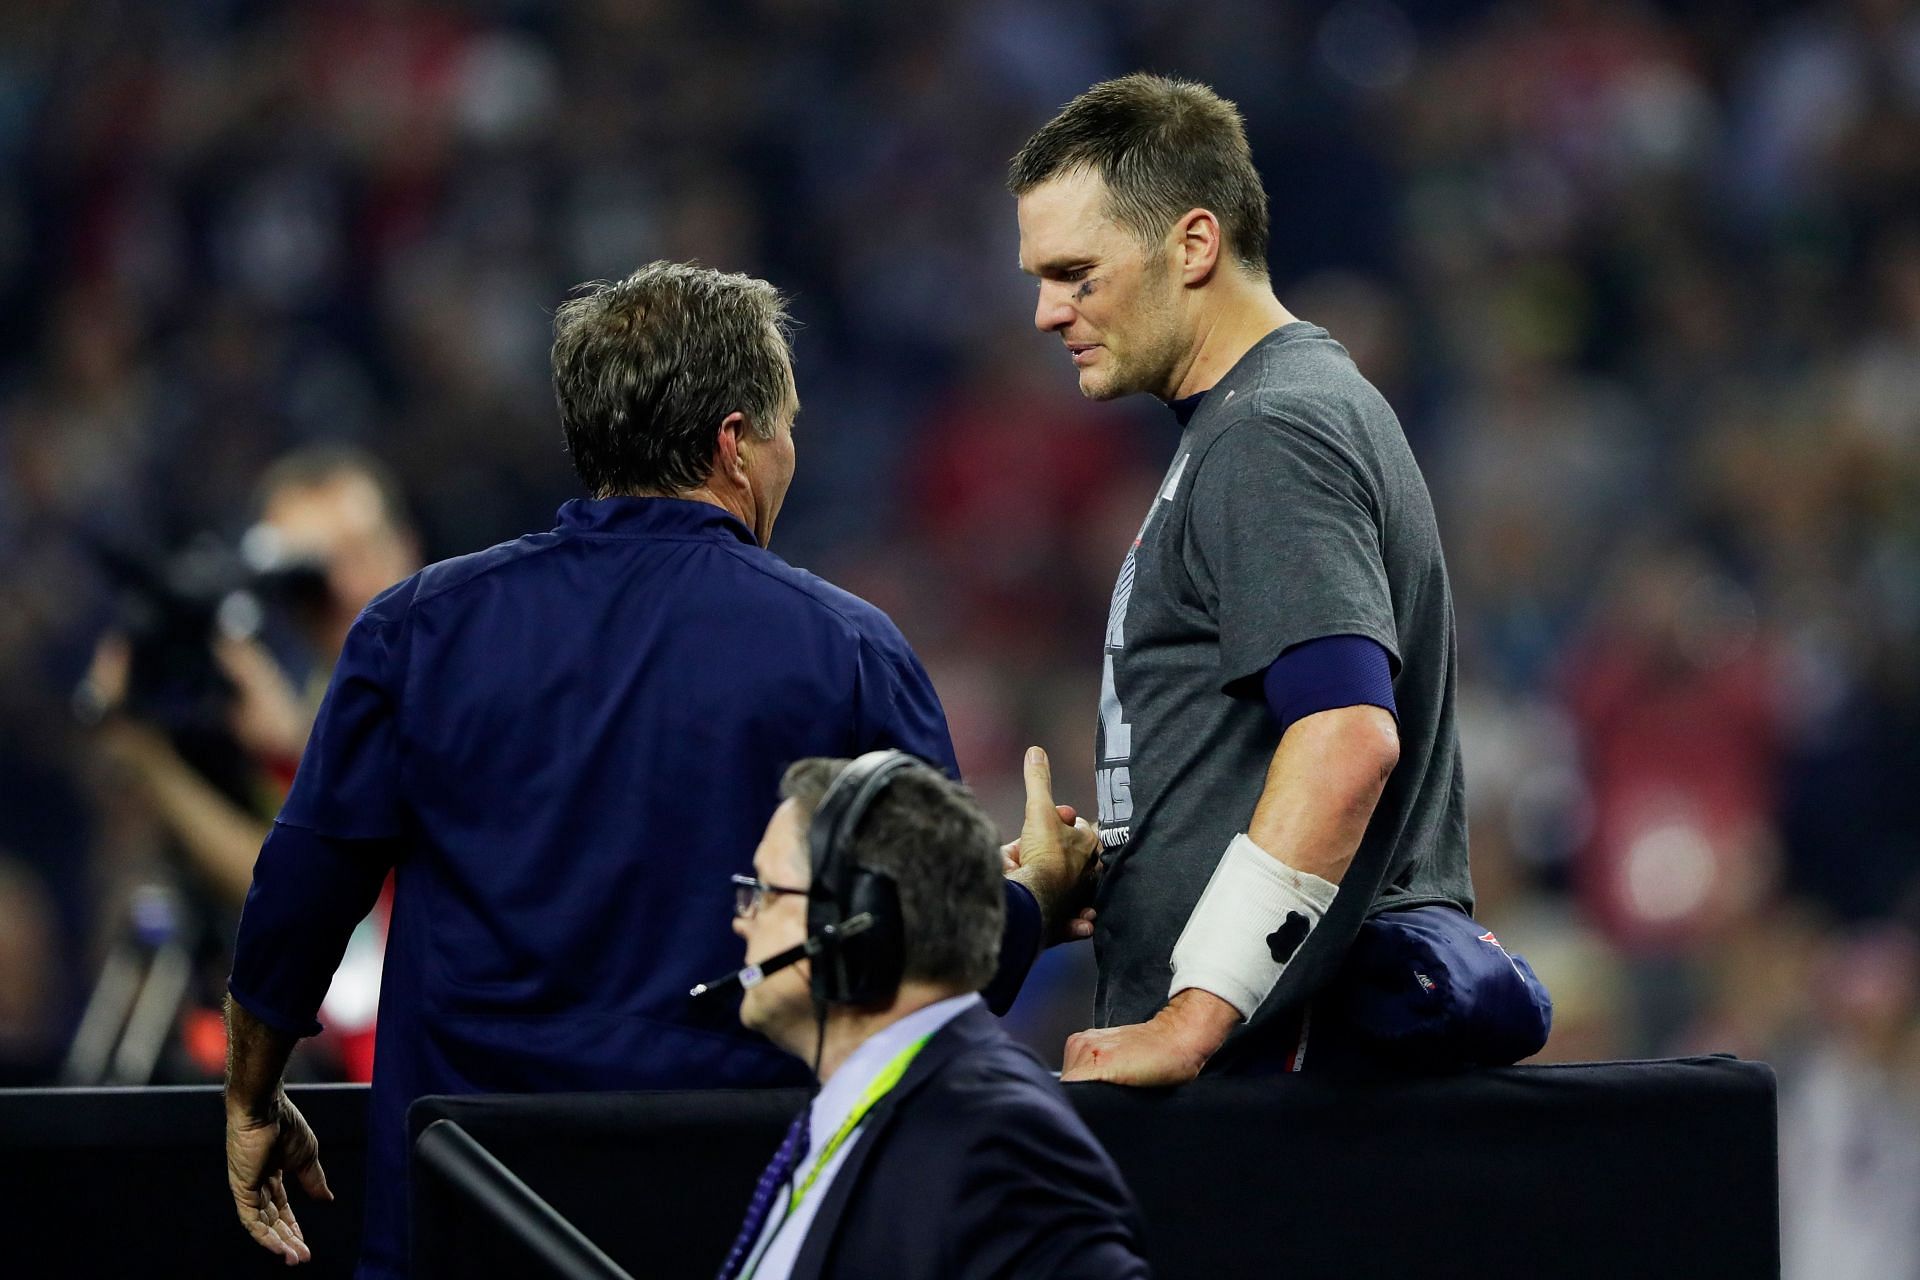 Tom Brady and Bill Belichick at Super Bowl LI - New England Patriots v Atlanta Falcons